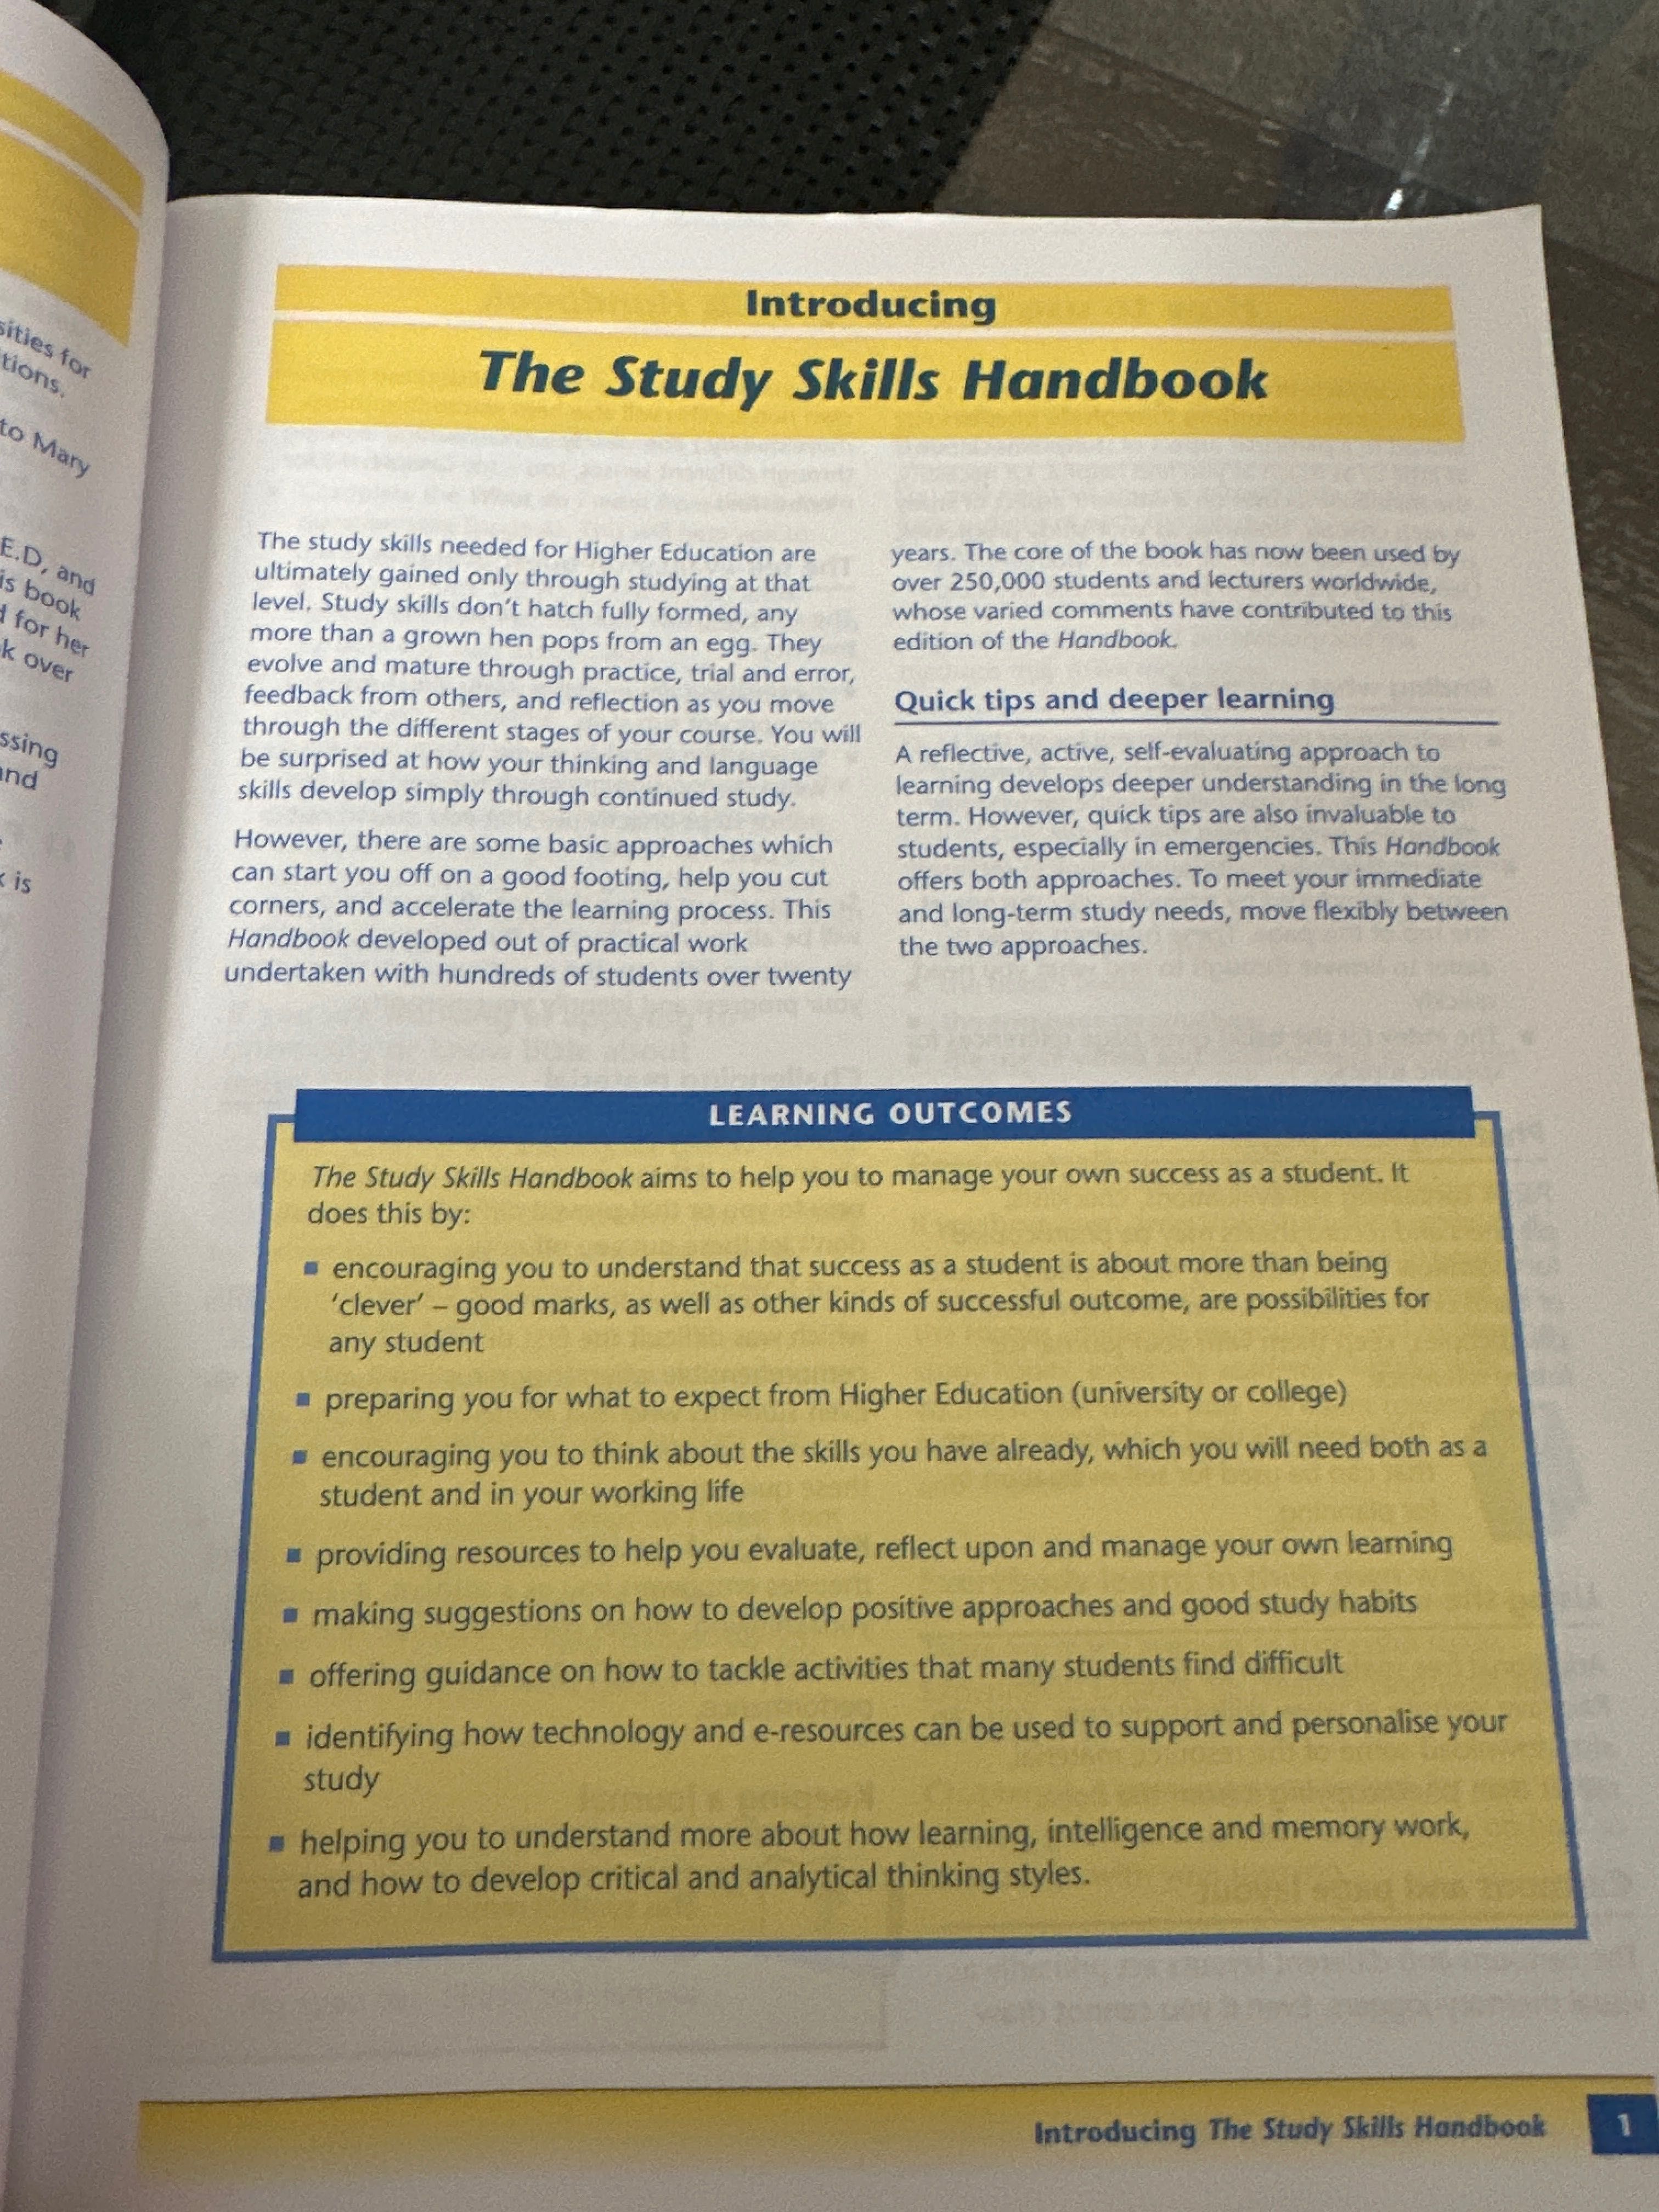 The study skills handbook